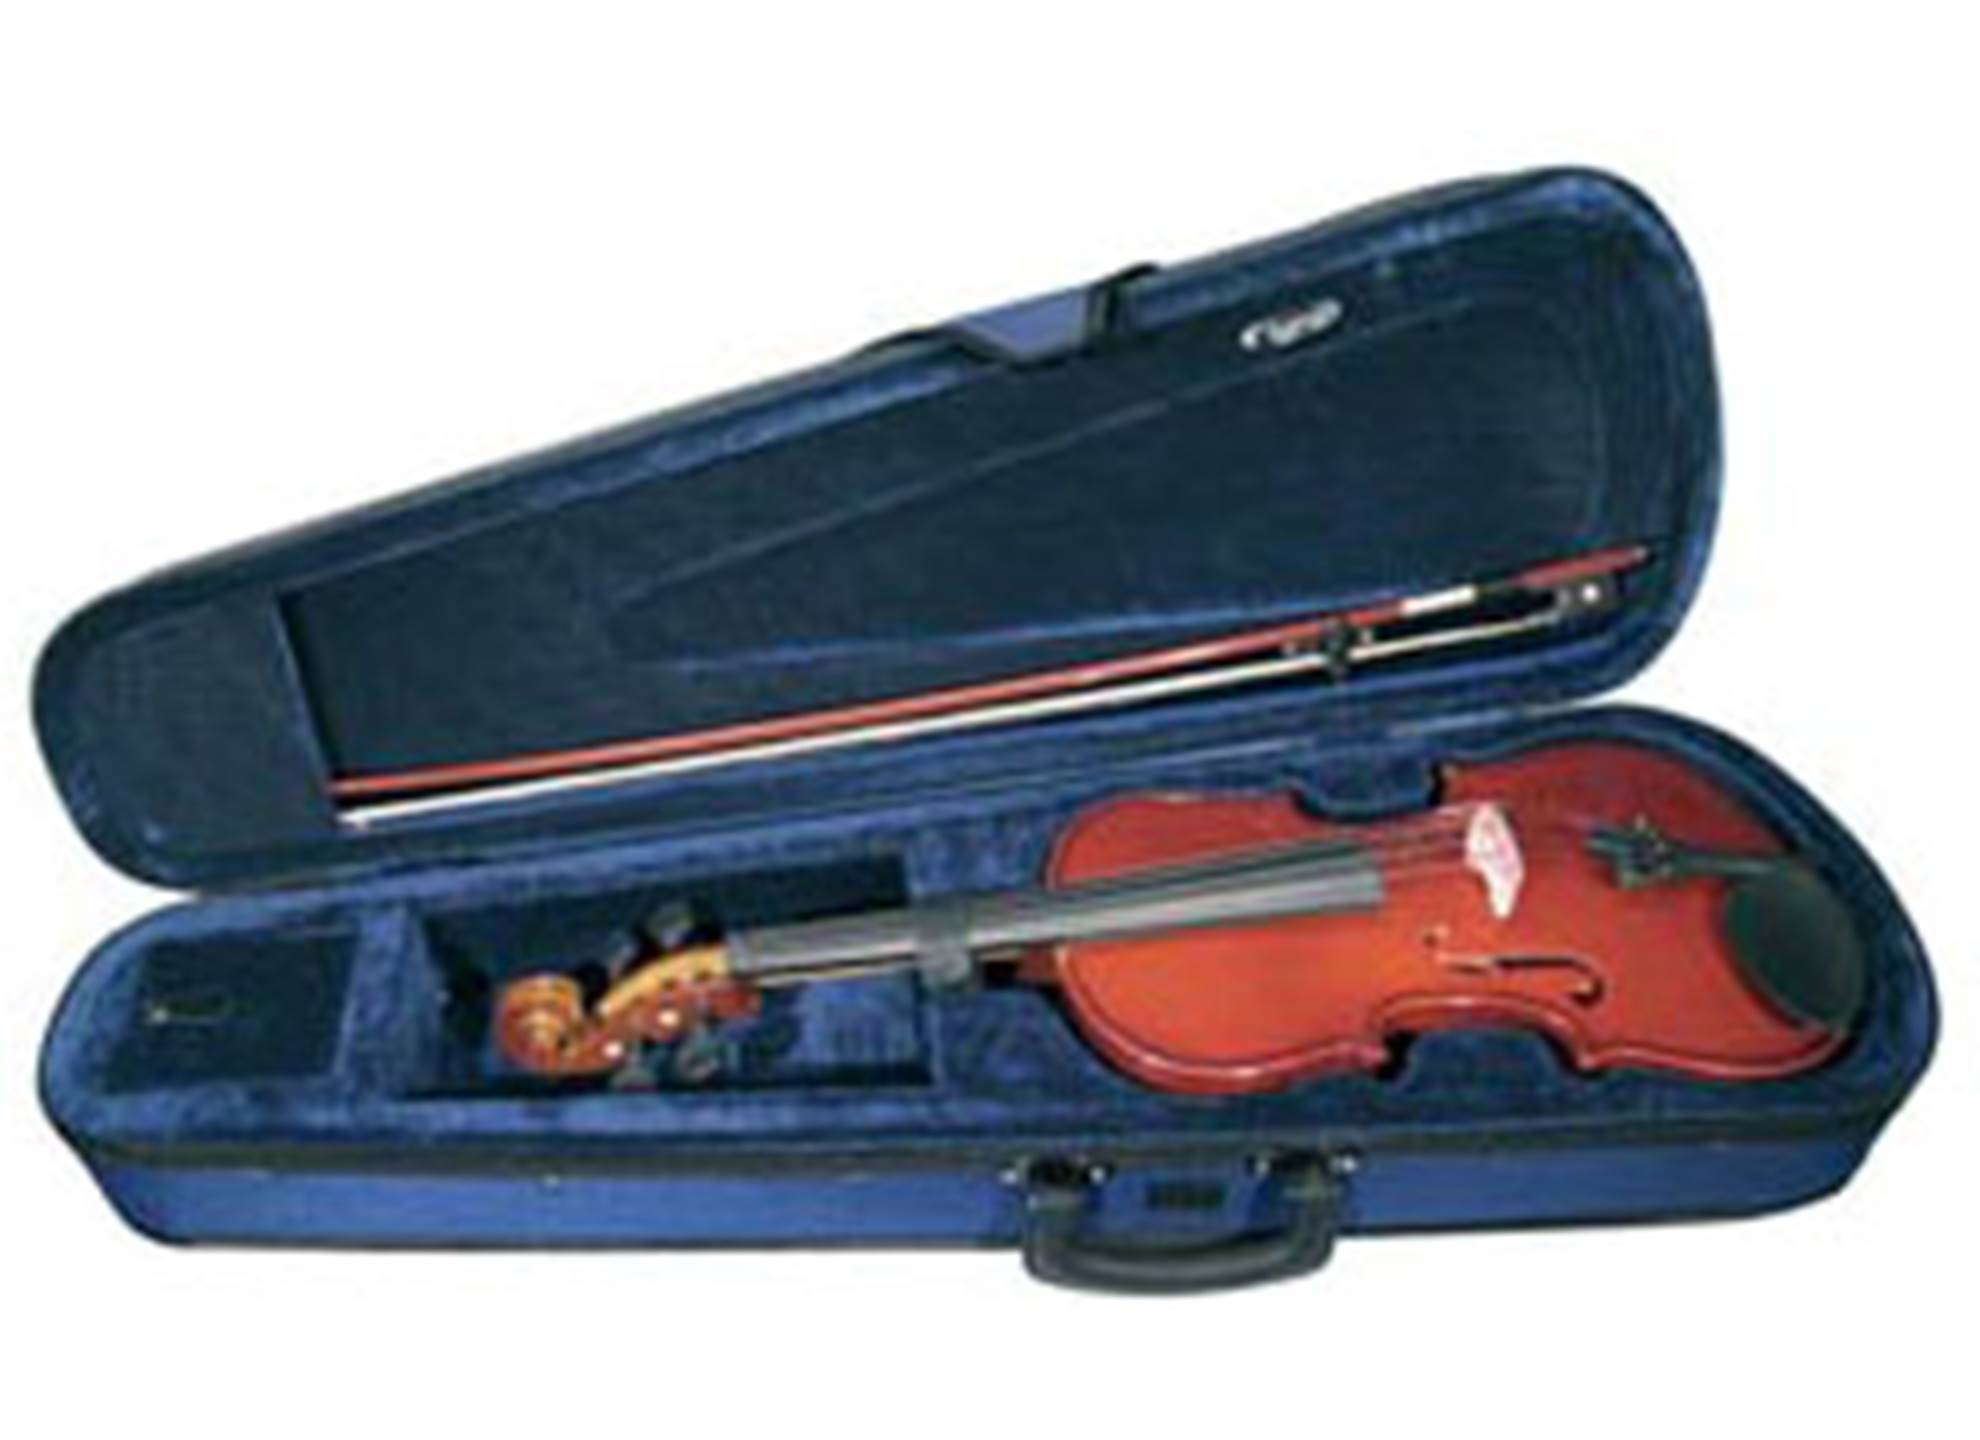 LV-1616 Violin Set 1/16